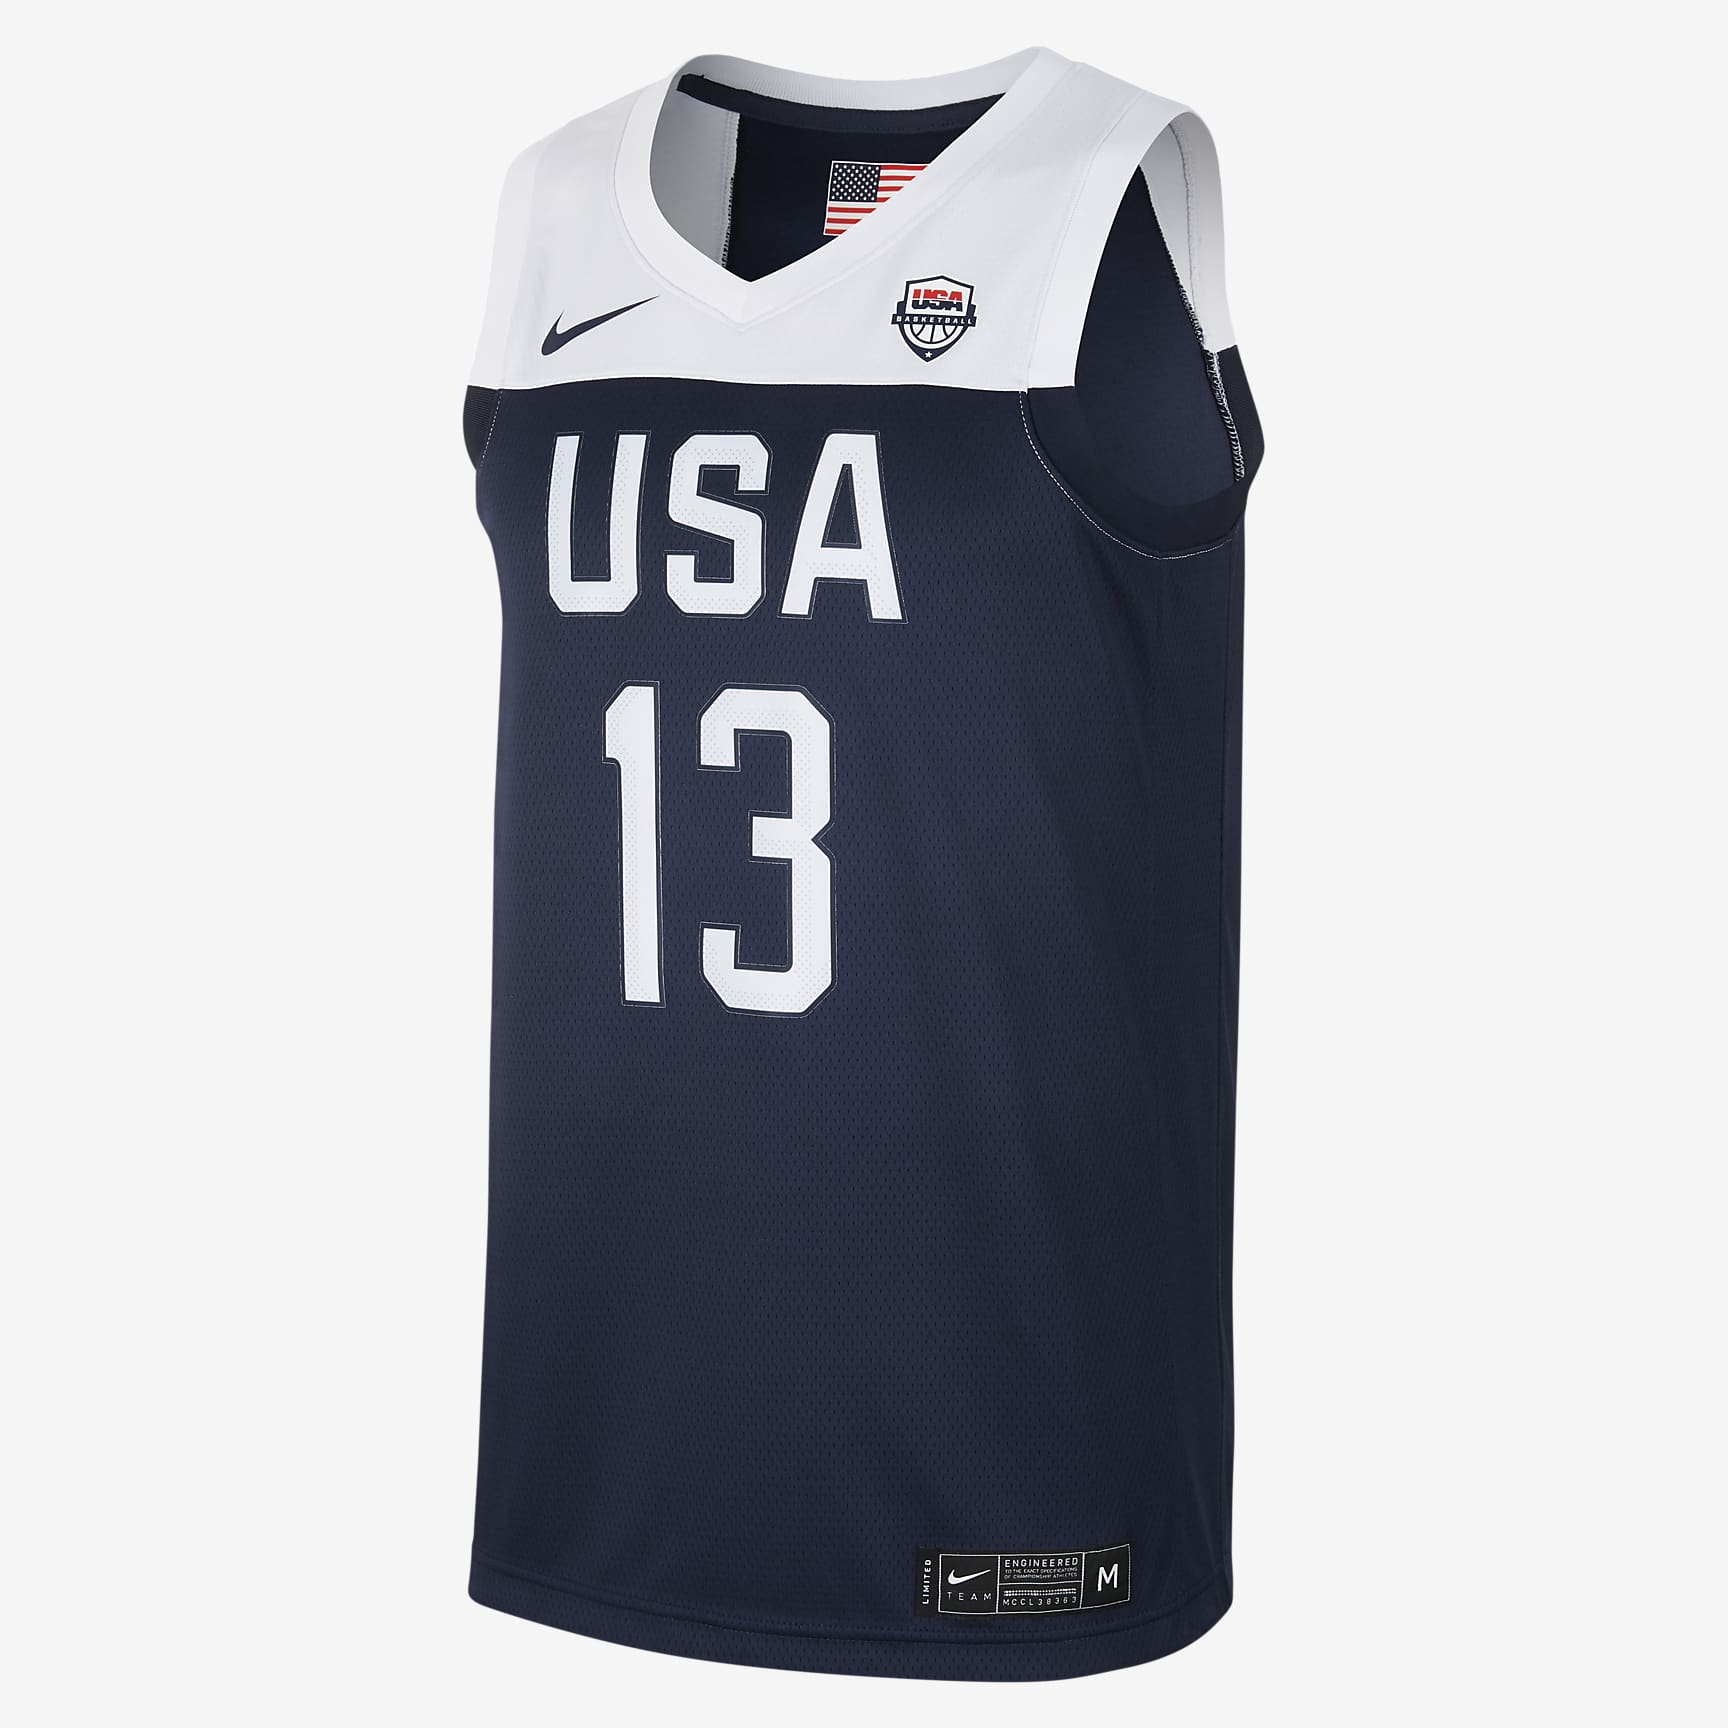 Maillot de basketball USA Nike (Road) pour Homme. Nike CA